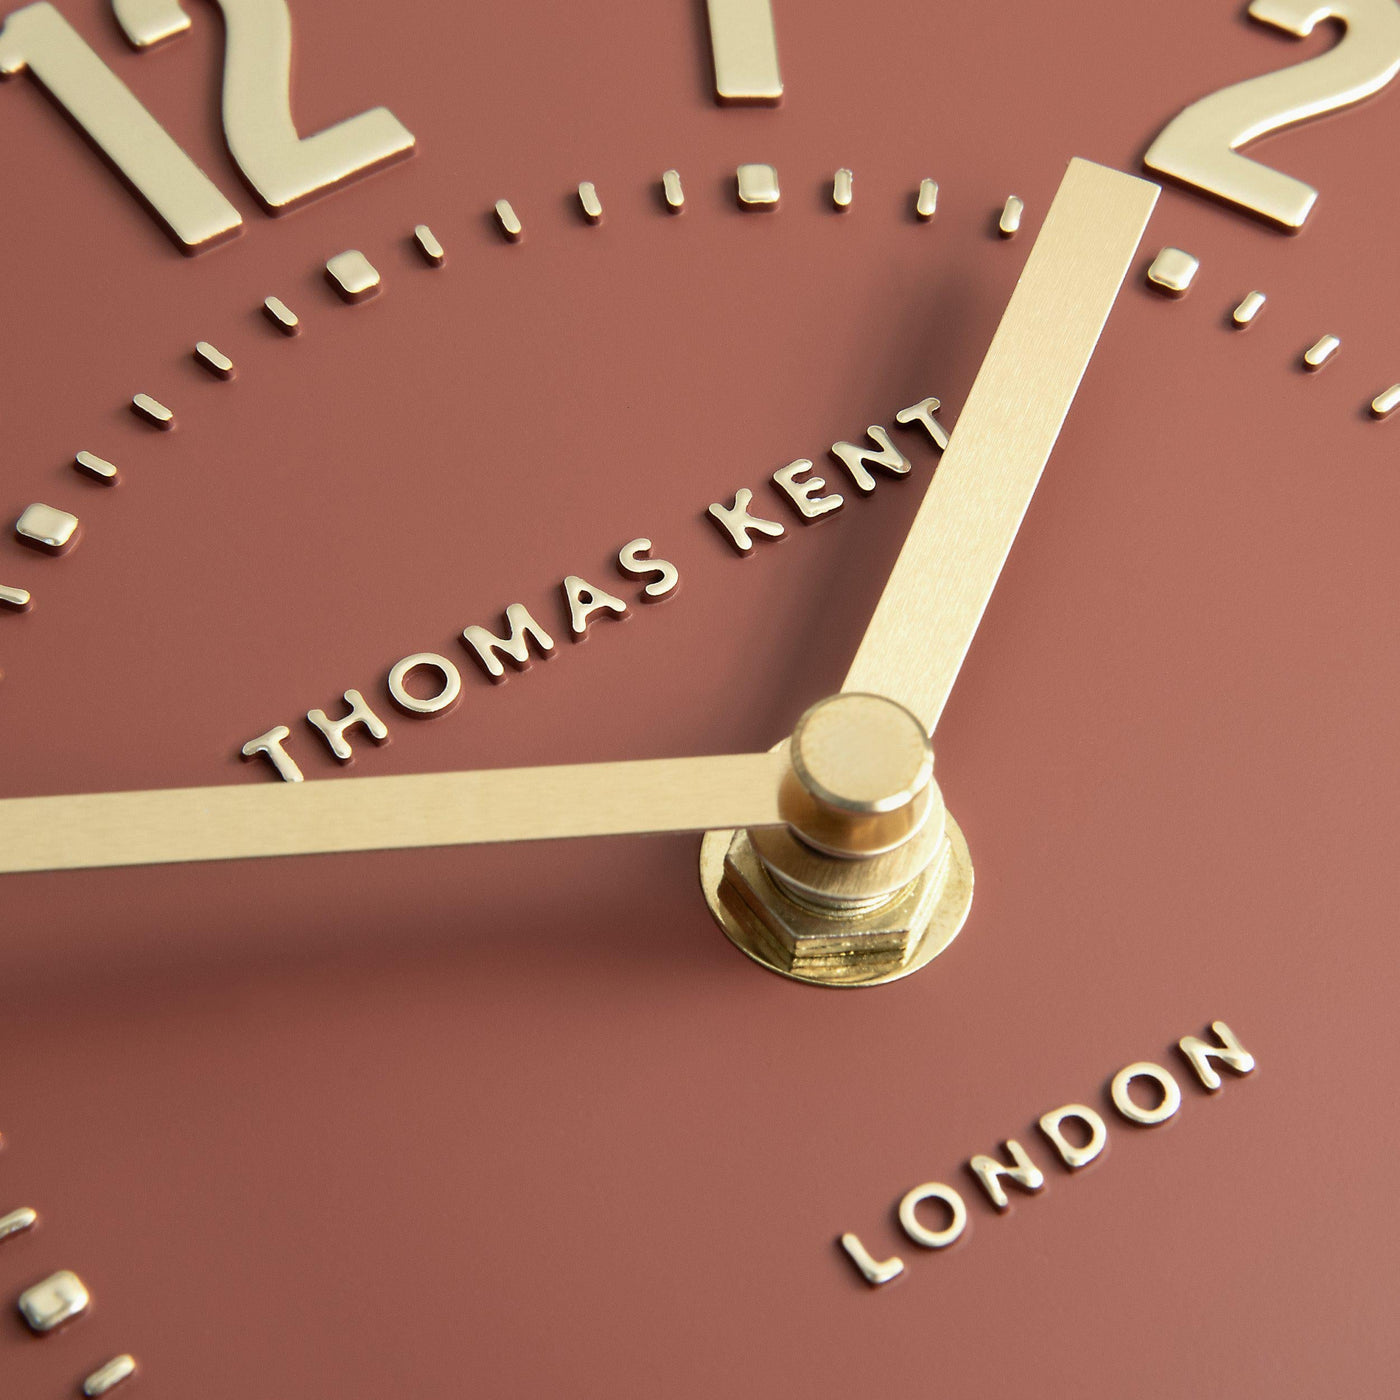 Thomas Kent London. Mulberry Mantel Clock 6" (15cm) Auburn *NEW* - timeframedclocks